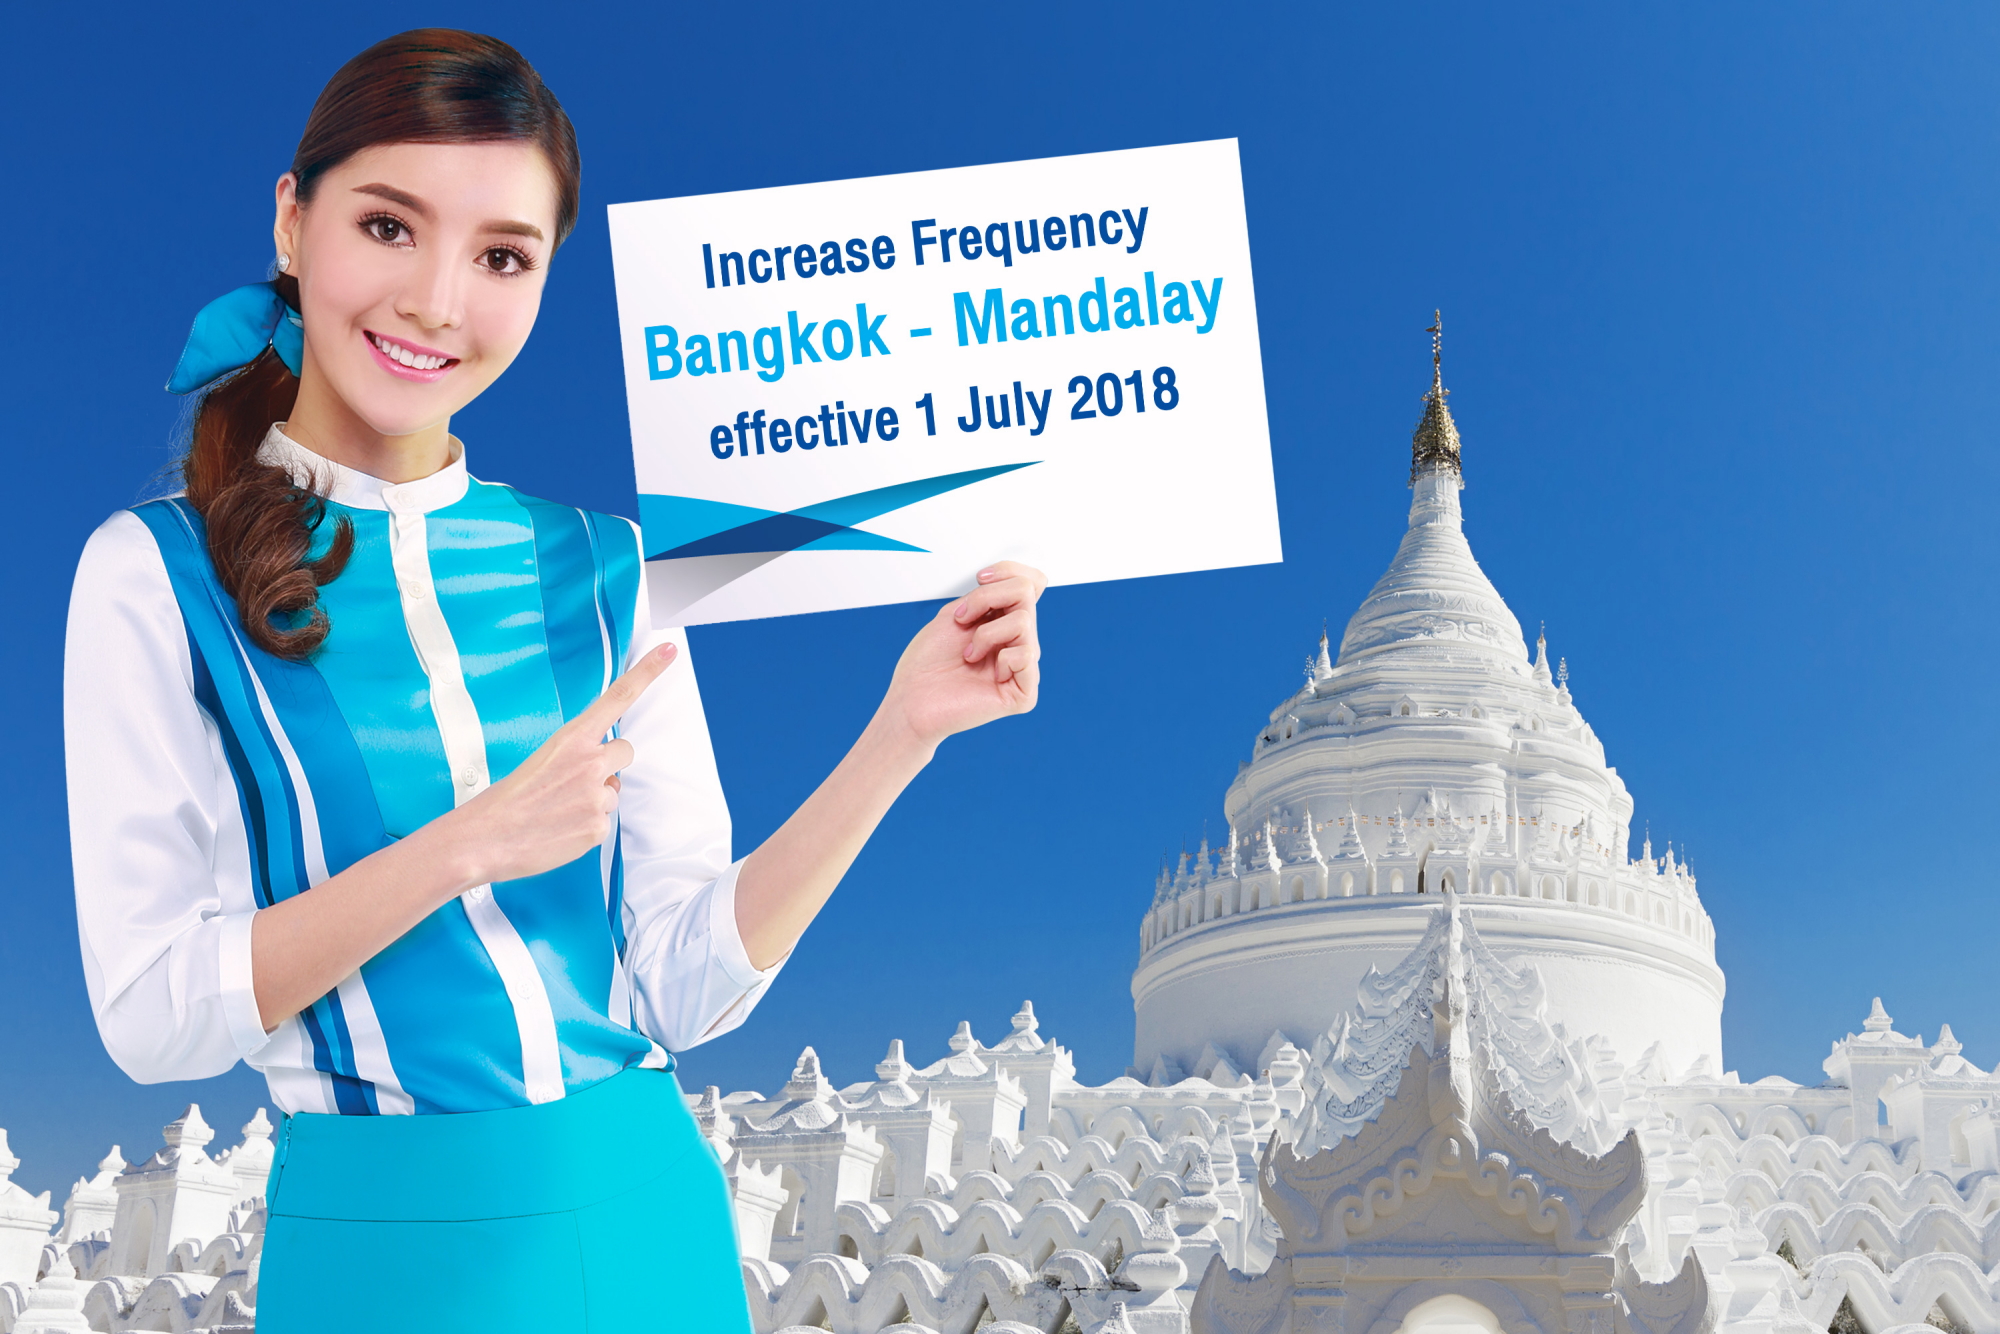 Bangkok Airways has unveiled plans to increase flights between Bangkok and Mandalay, Myanmar. The airline will increase flights to 11 per week from 1 July 2018. Click to enlarge.